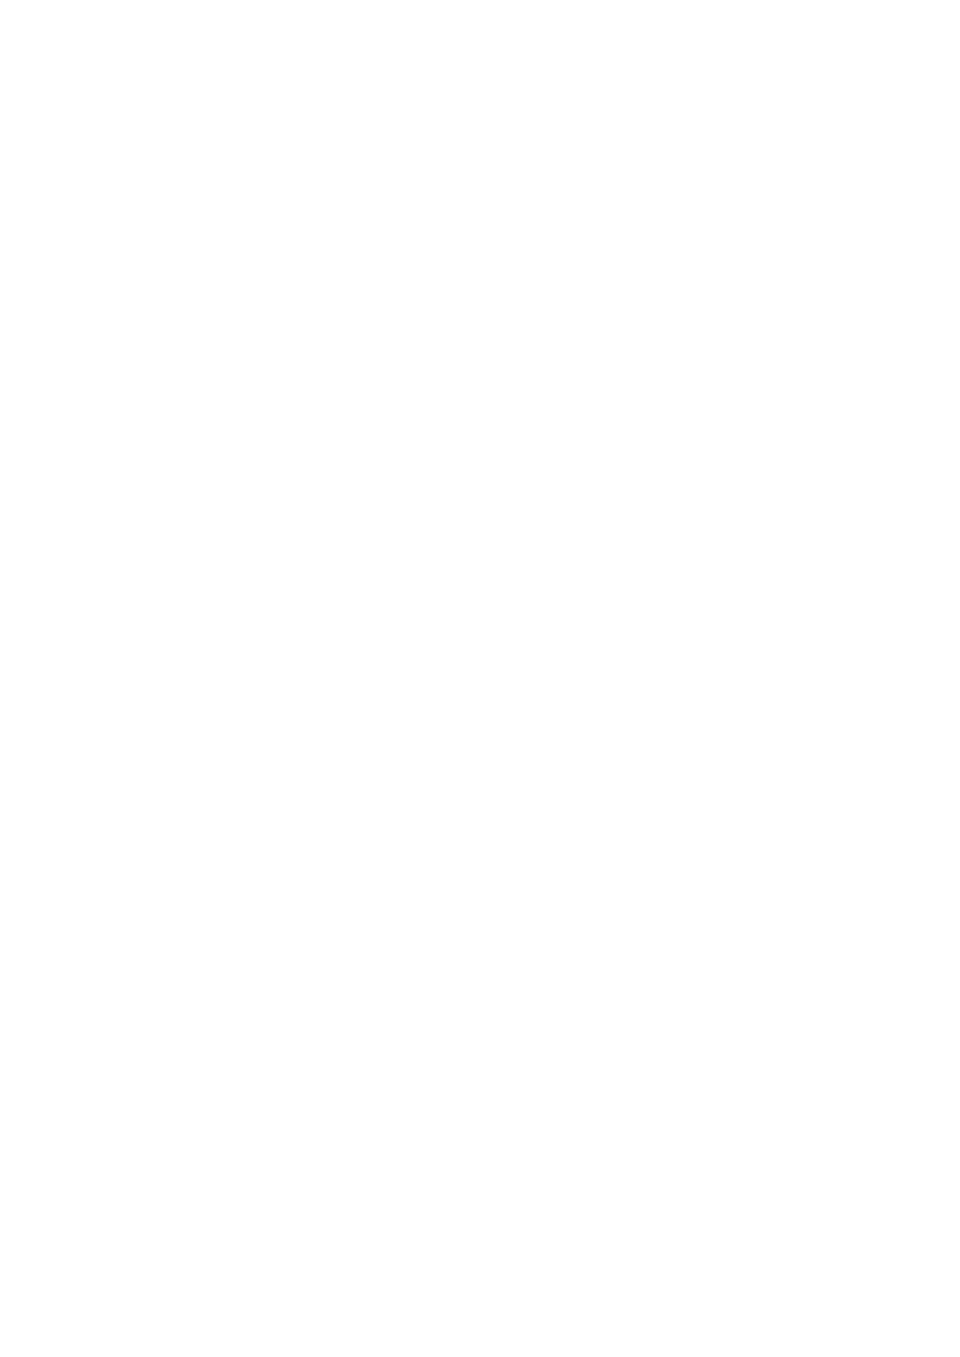 John Wiley & Sons, Inc., New York, NY, USA. Bill Dudney, Joseph Krozak, Kevin Wittkopf, Stephen Asbury, and David Osborne. 2002. J2EE Antipatterns (1 ed.). John Wiley & Sons, Inc., New York, NY, USA. Catálogos de Anti-Patterns http://c2.